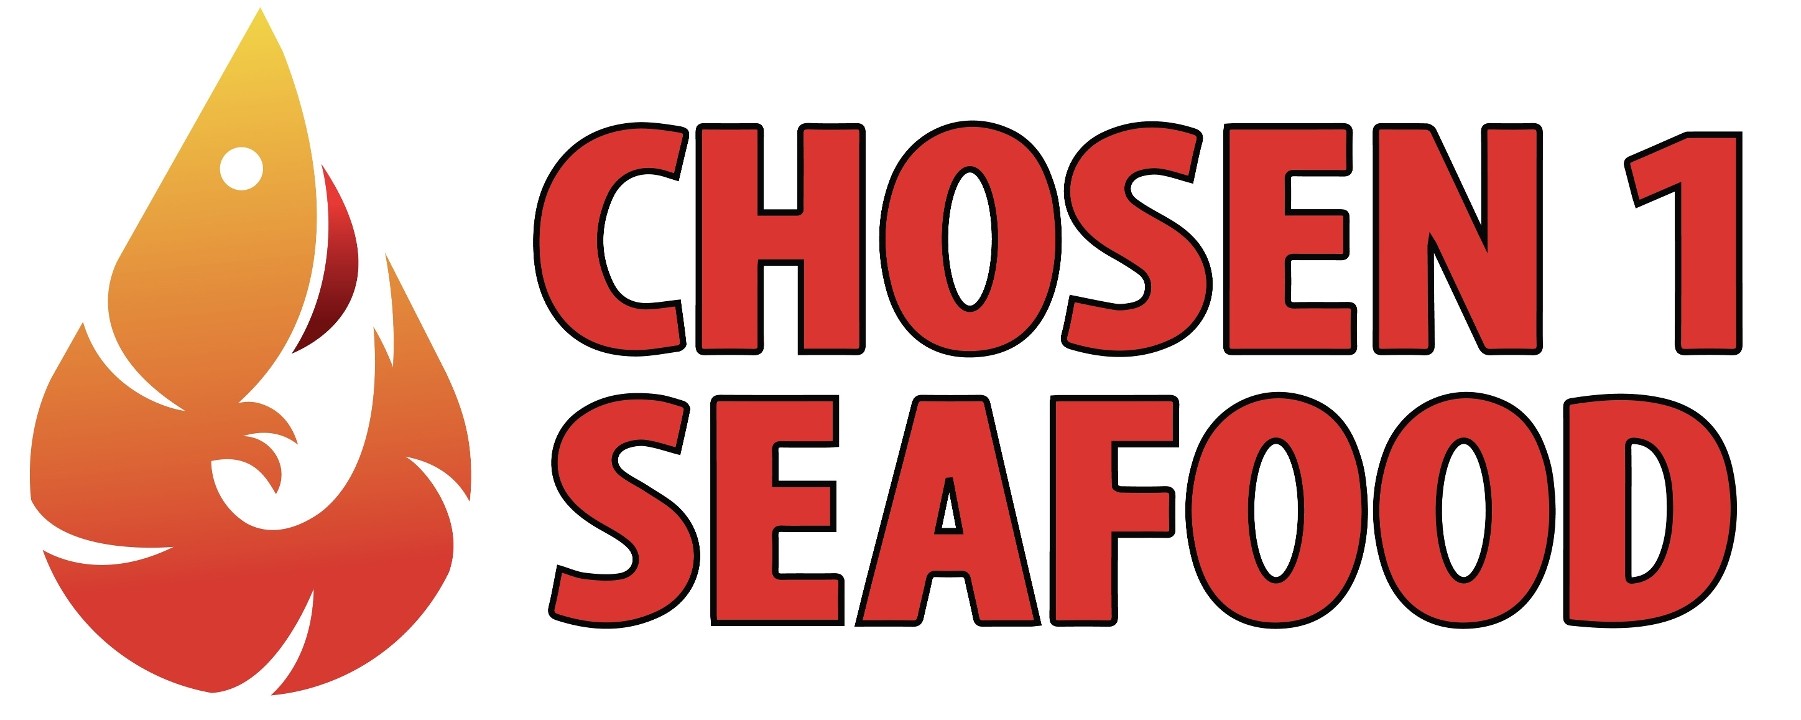 Chosen 1 Seafood - Manchester